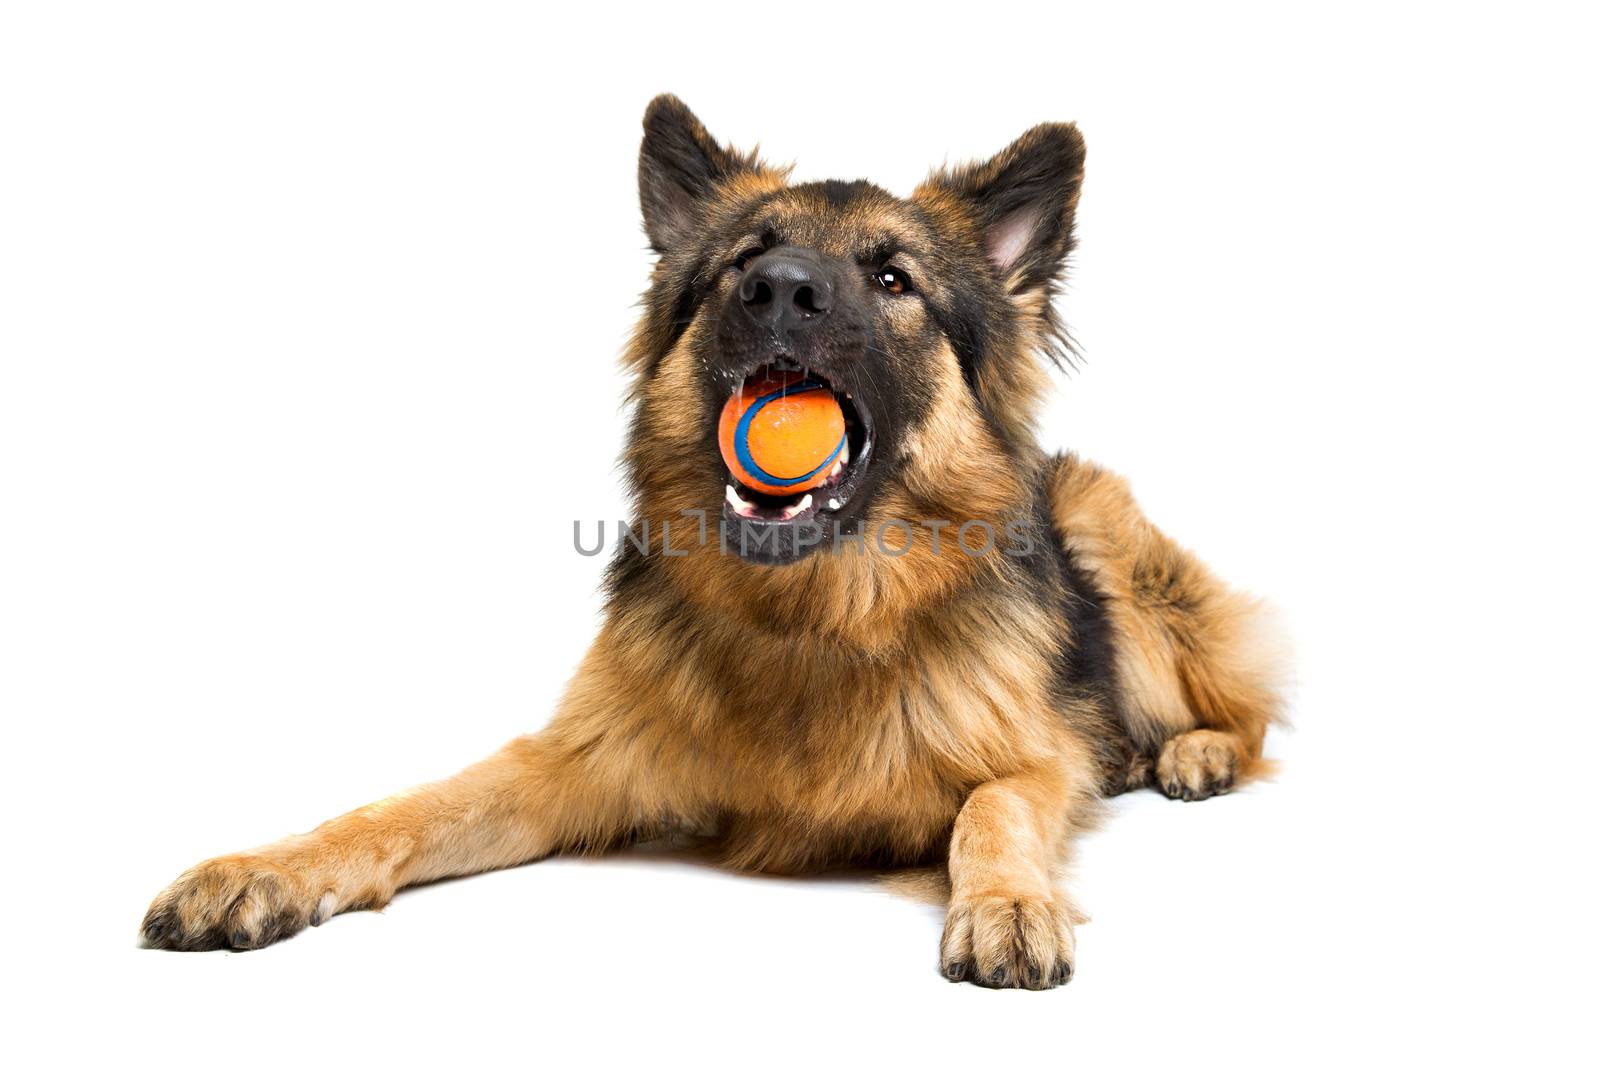 German shepherd chewing an orange ball by eriklam